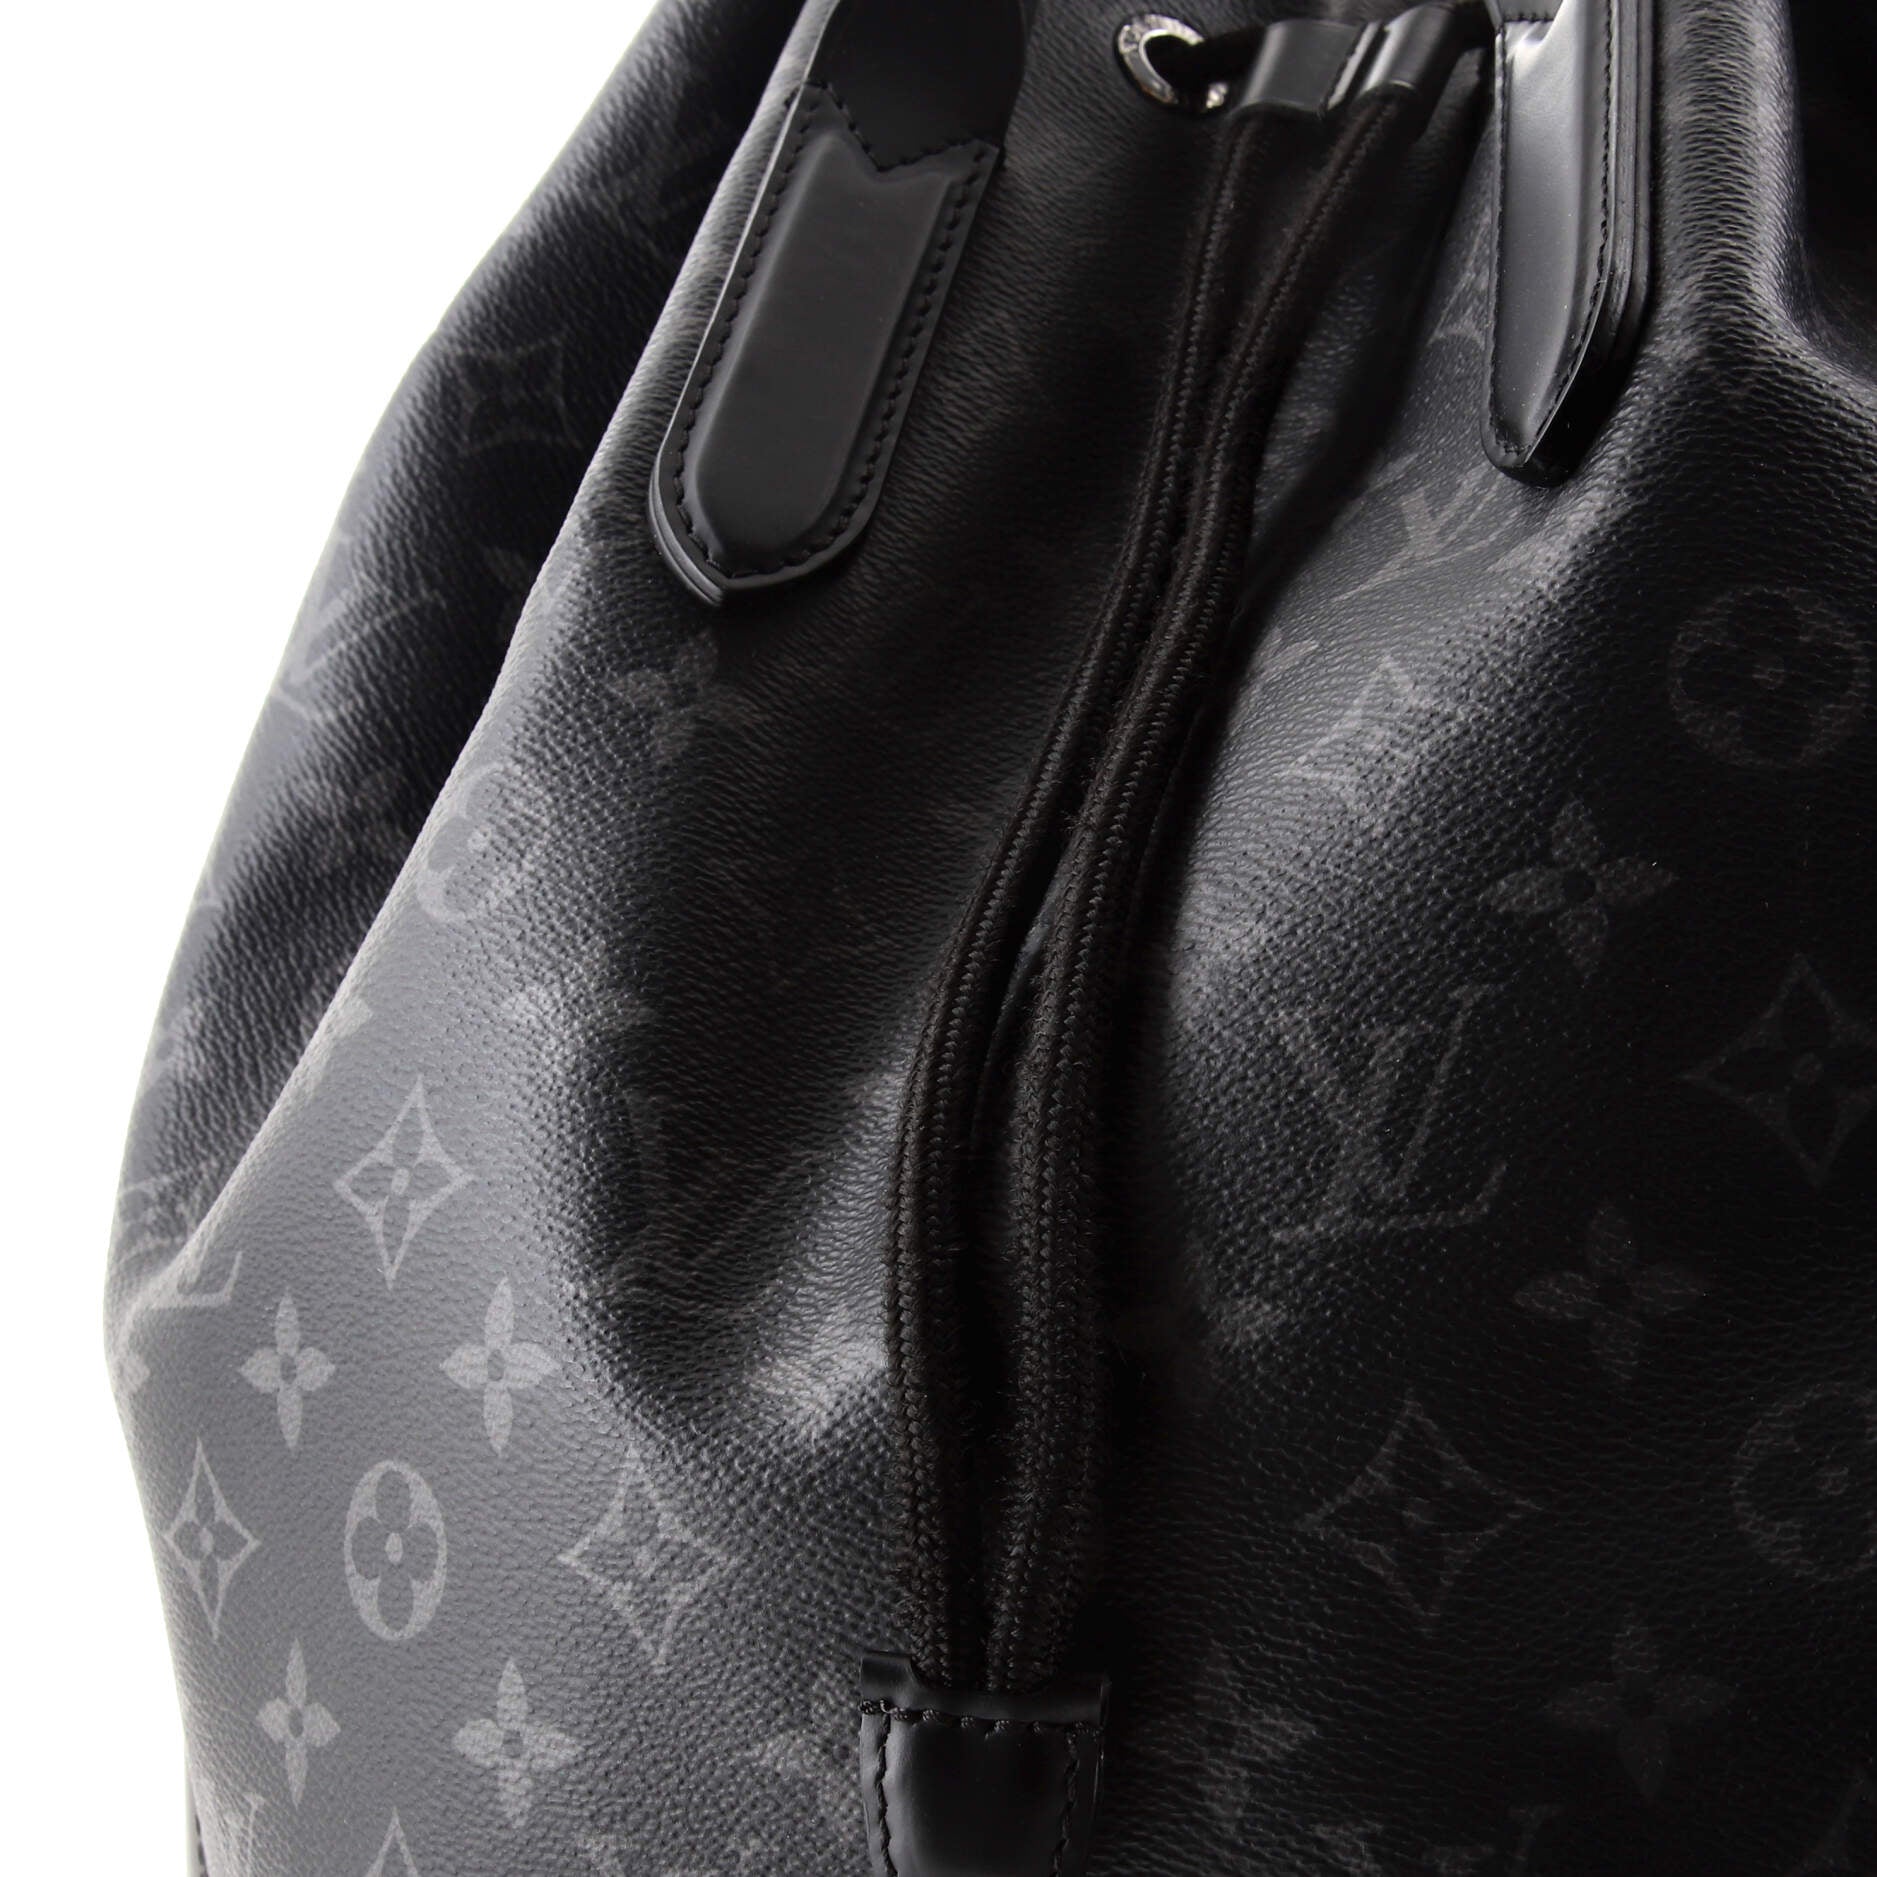 Louis Vuitton Explorer Backpack